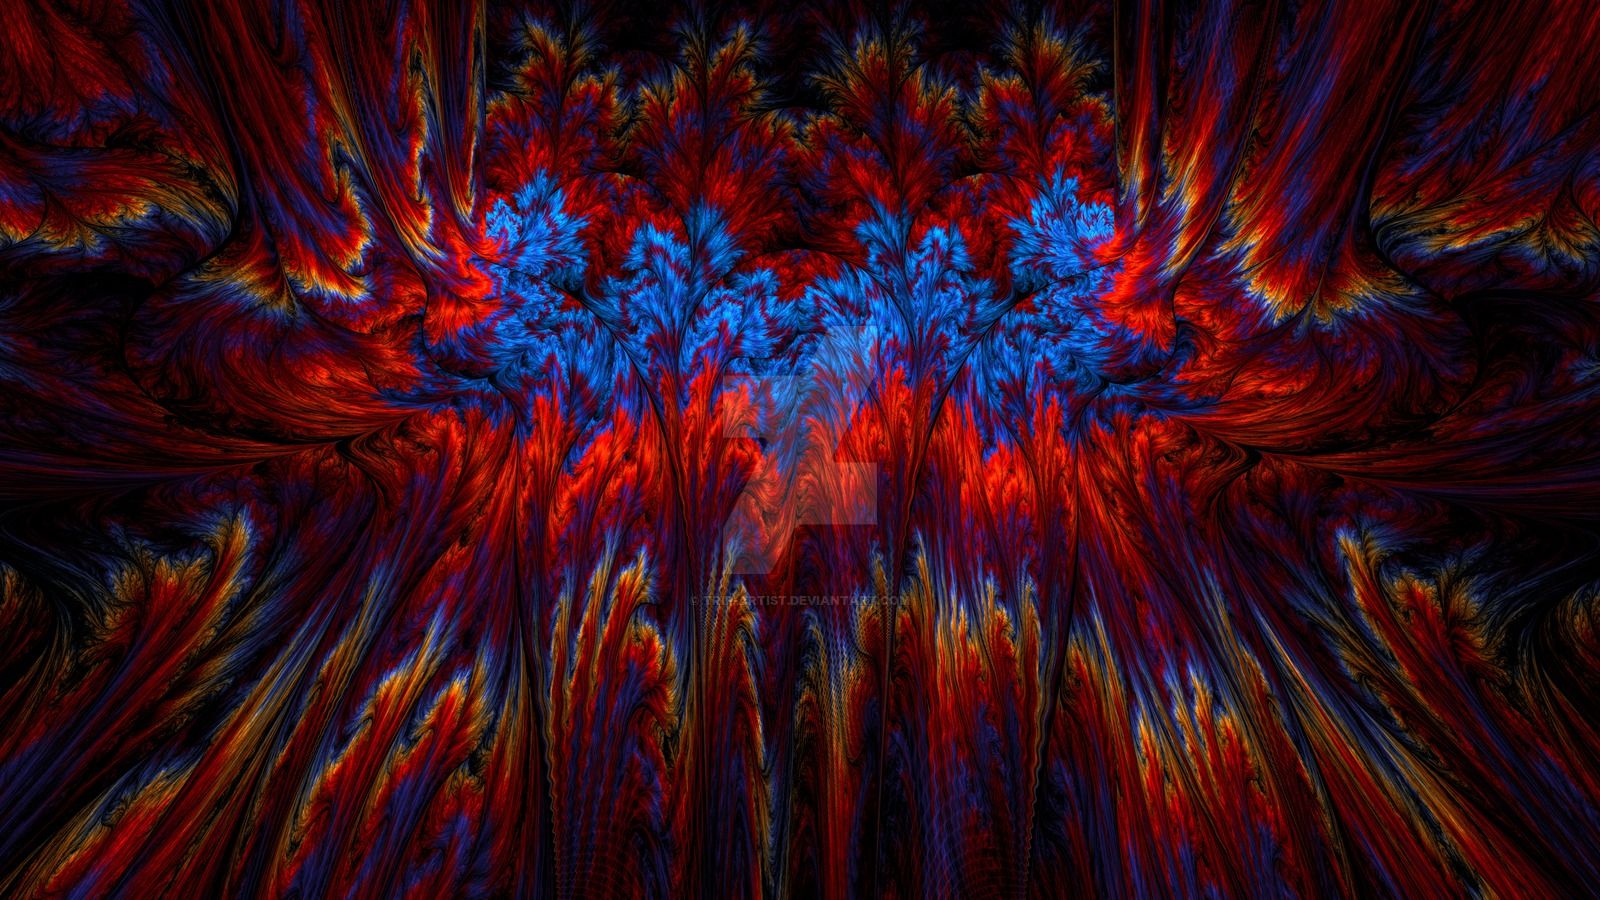 Psychedelic Spectra - HD Wallpaper by Trip-Artist on DeviantArt